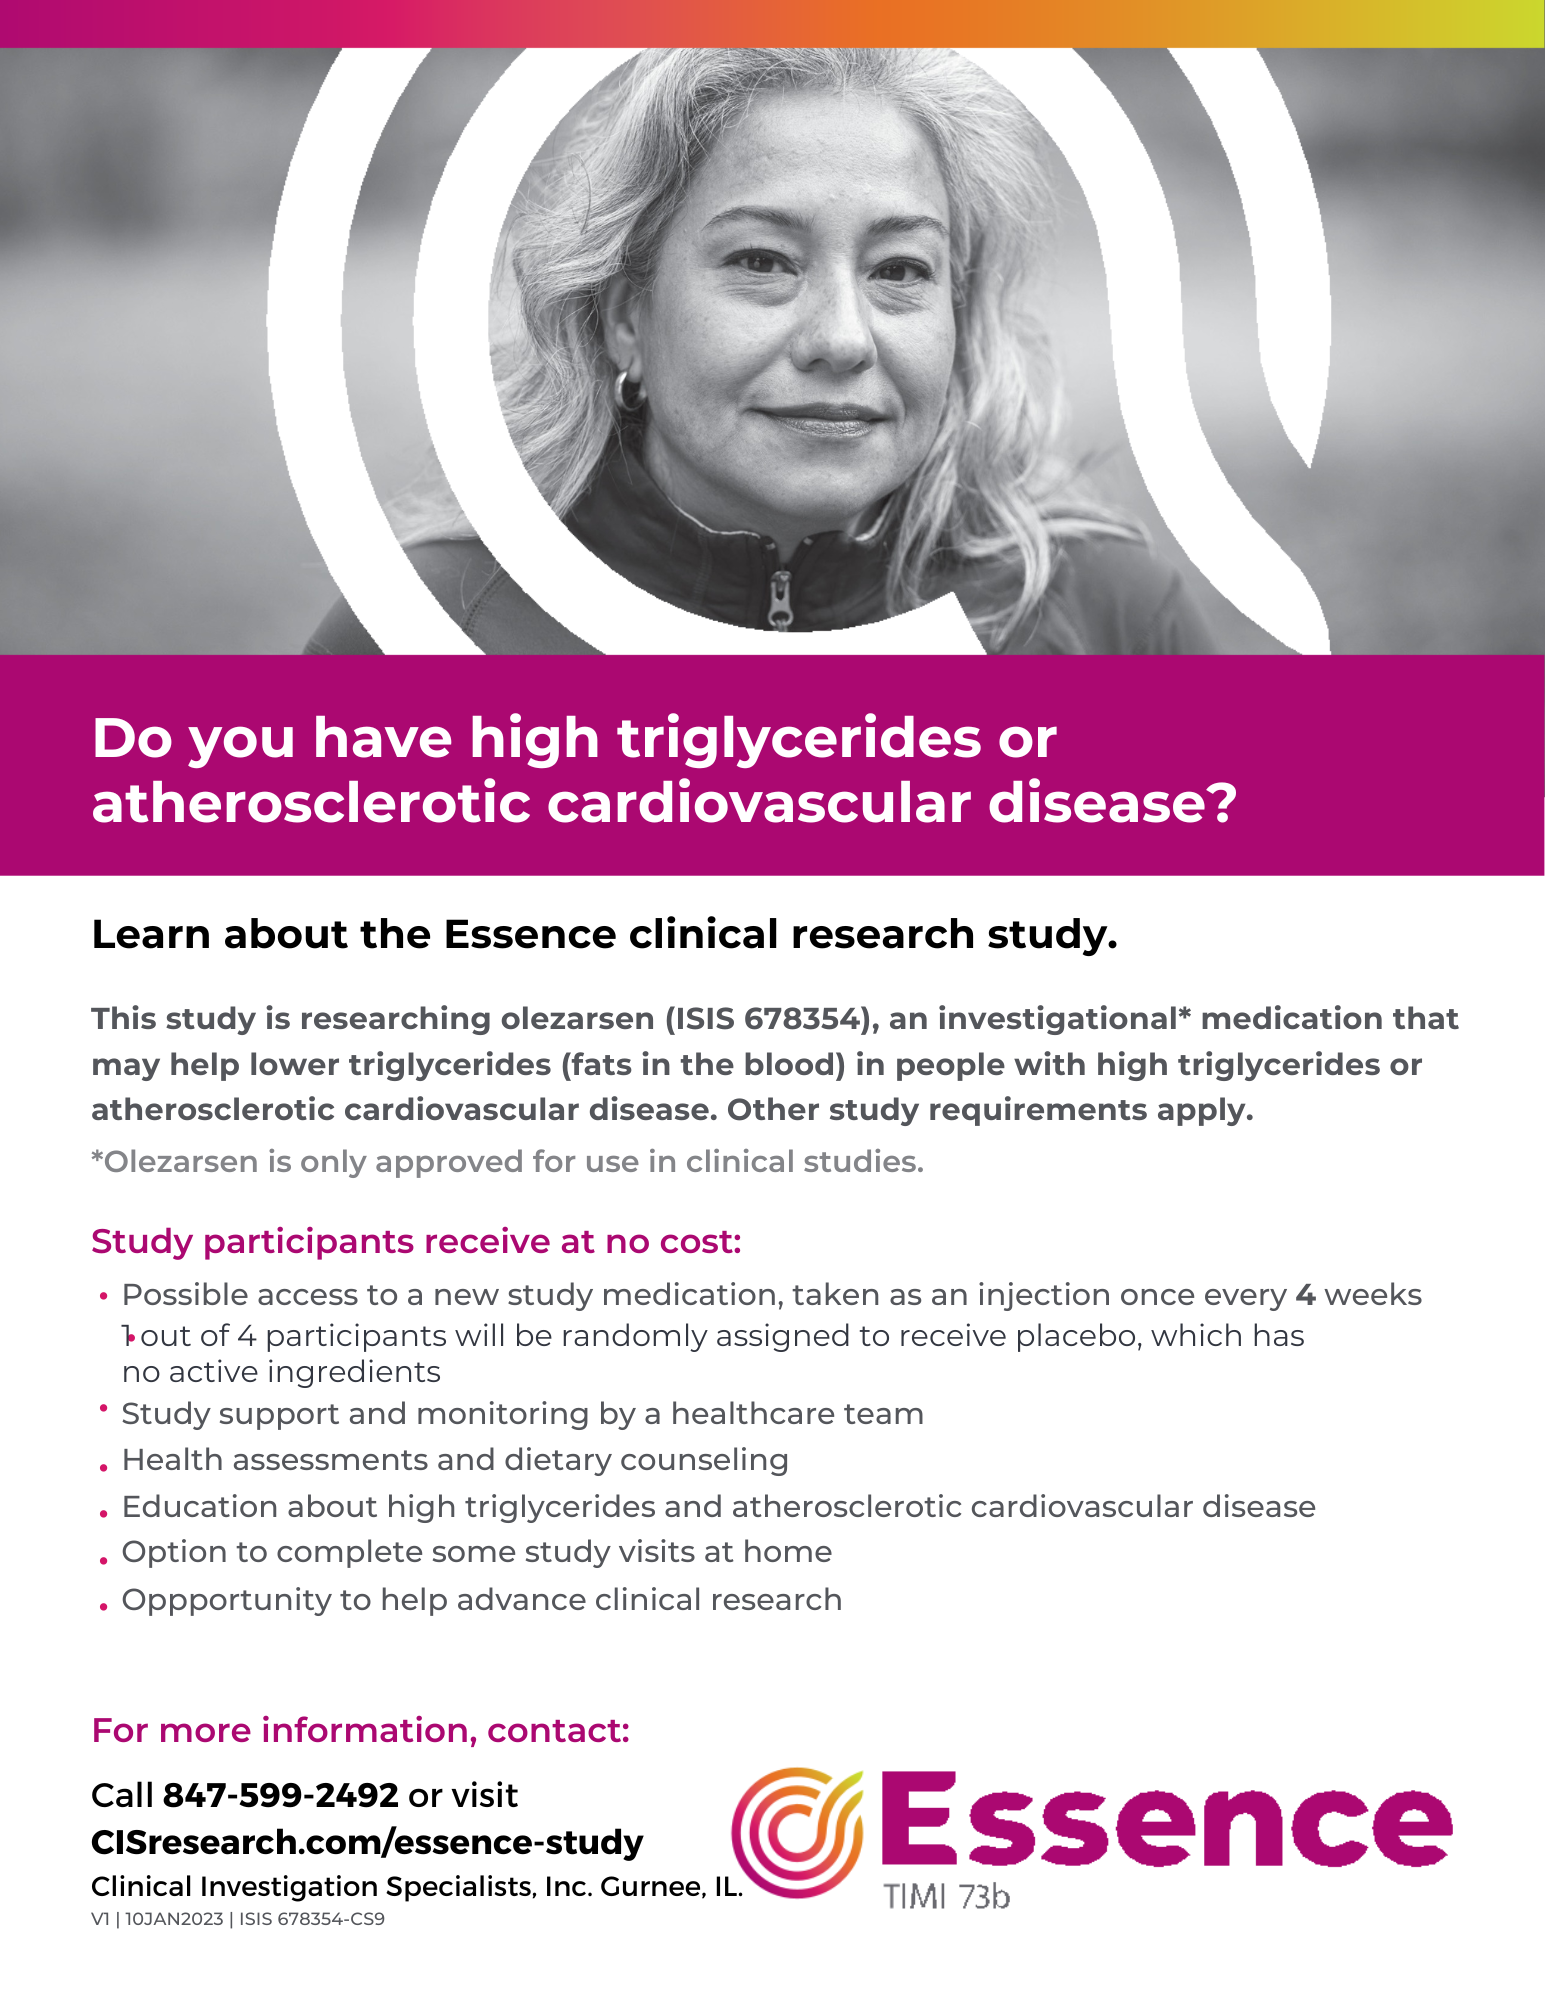 Essence study Hypertriglyceridemia trial patient information flyer